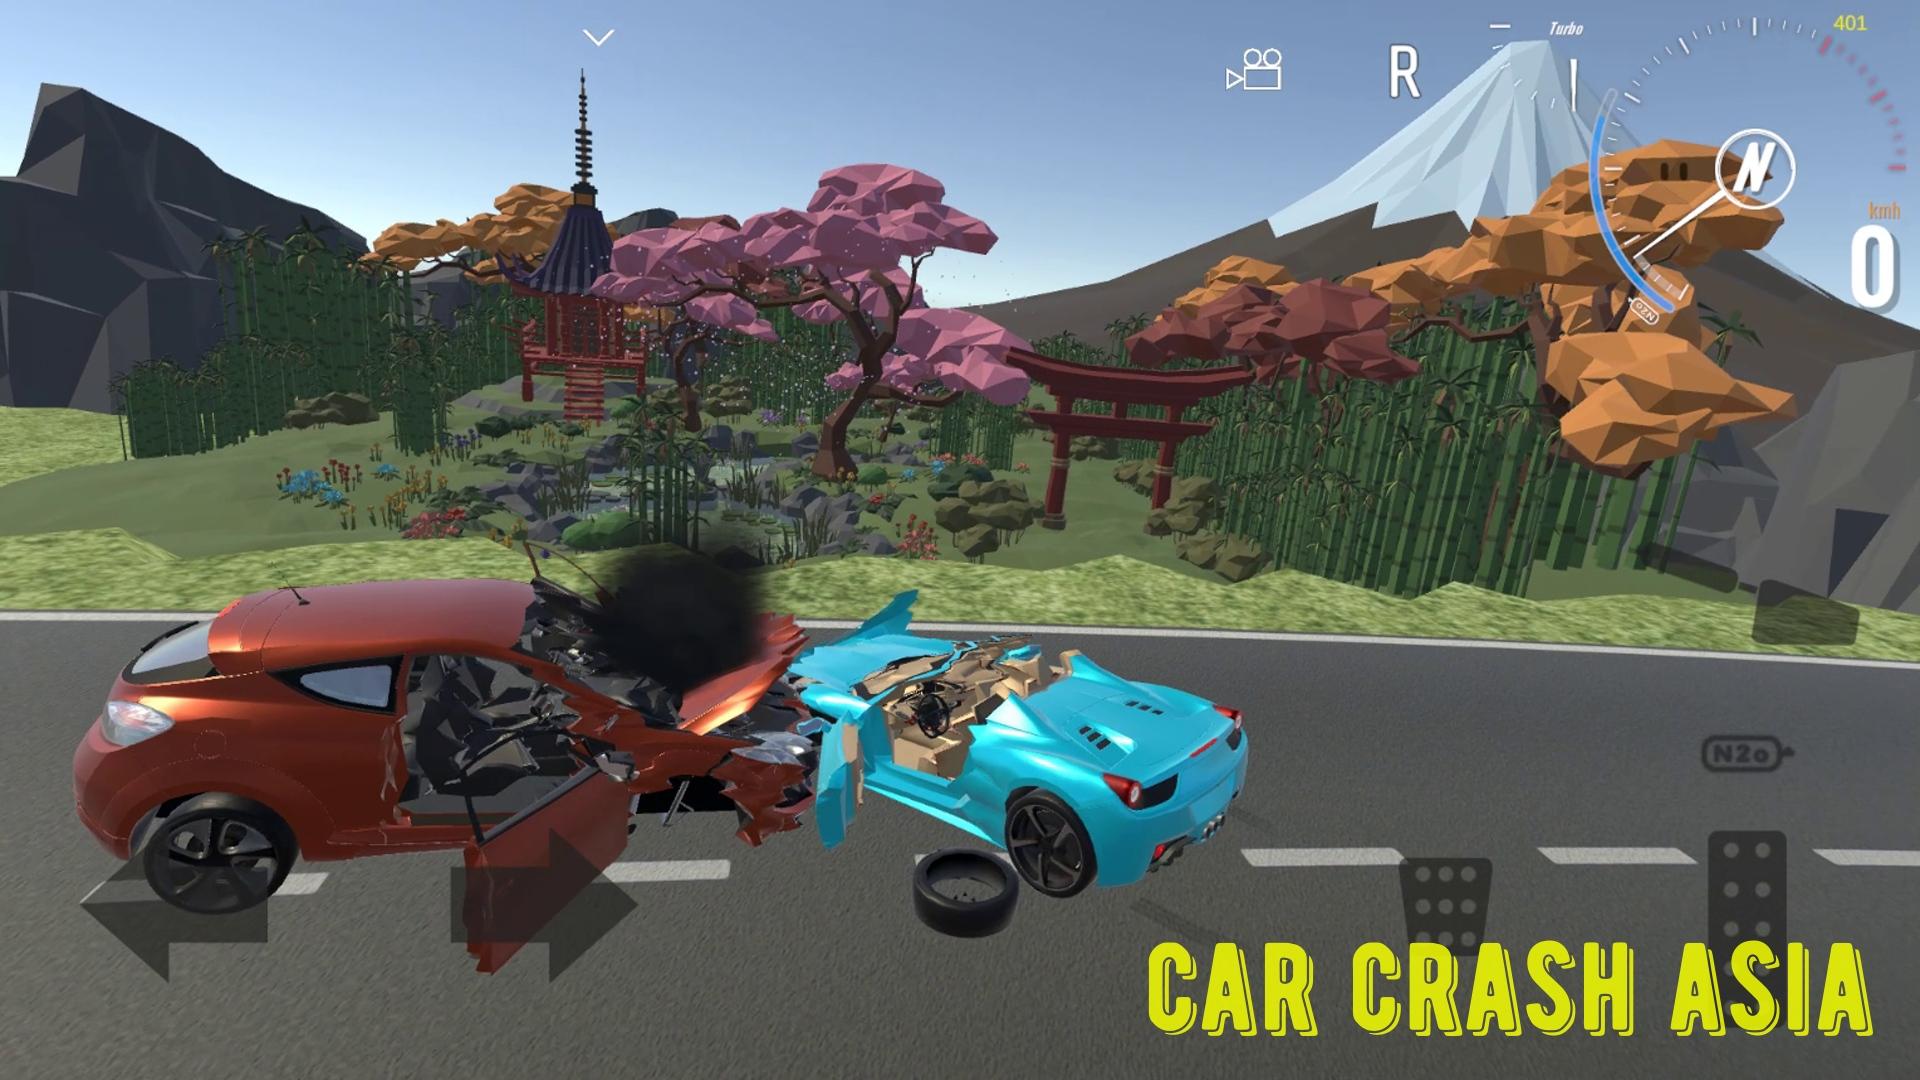 Car crash game. Crash car games for PC. Hittite games car crash. Арабские кар краш игры на андроид.